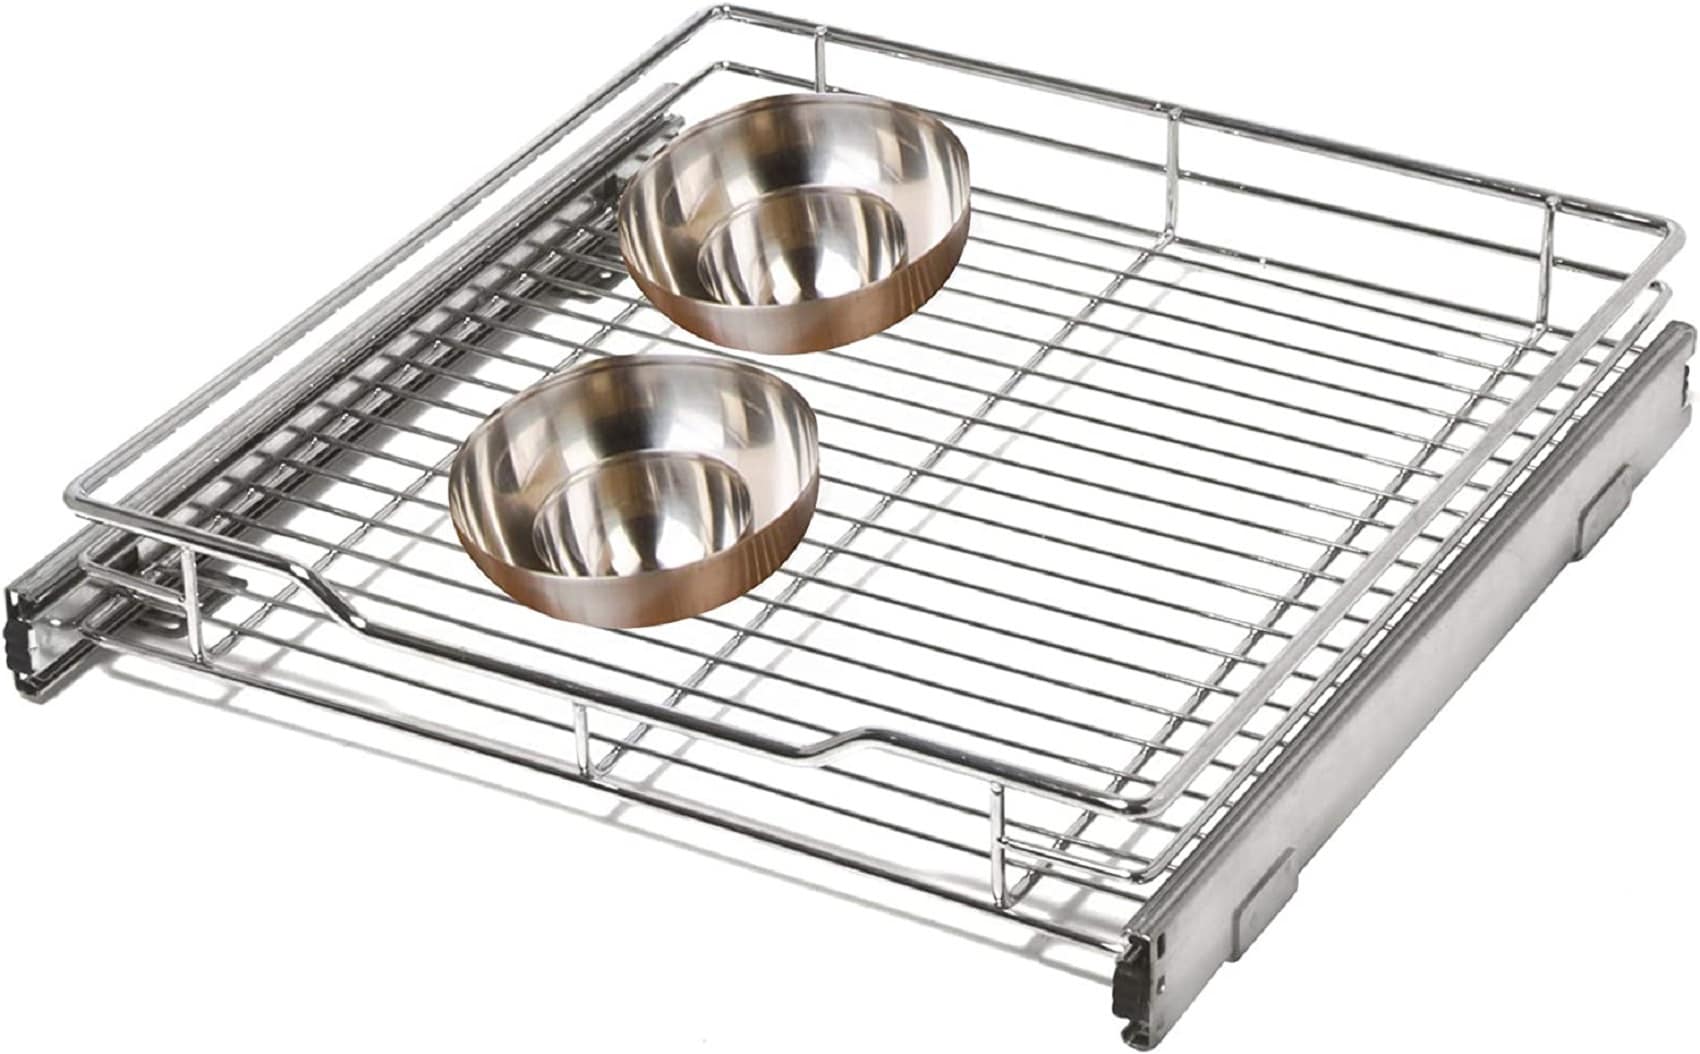 Smart Design Medium Steel 2-Tier Pull Out Cabinet Shelf - Chrome